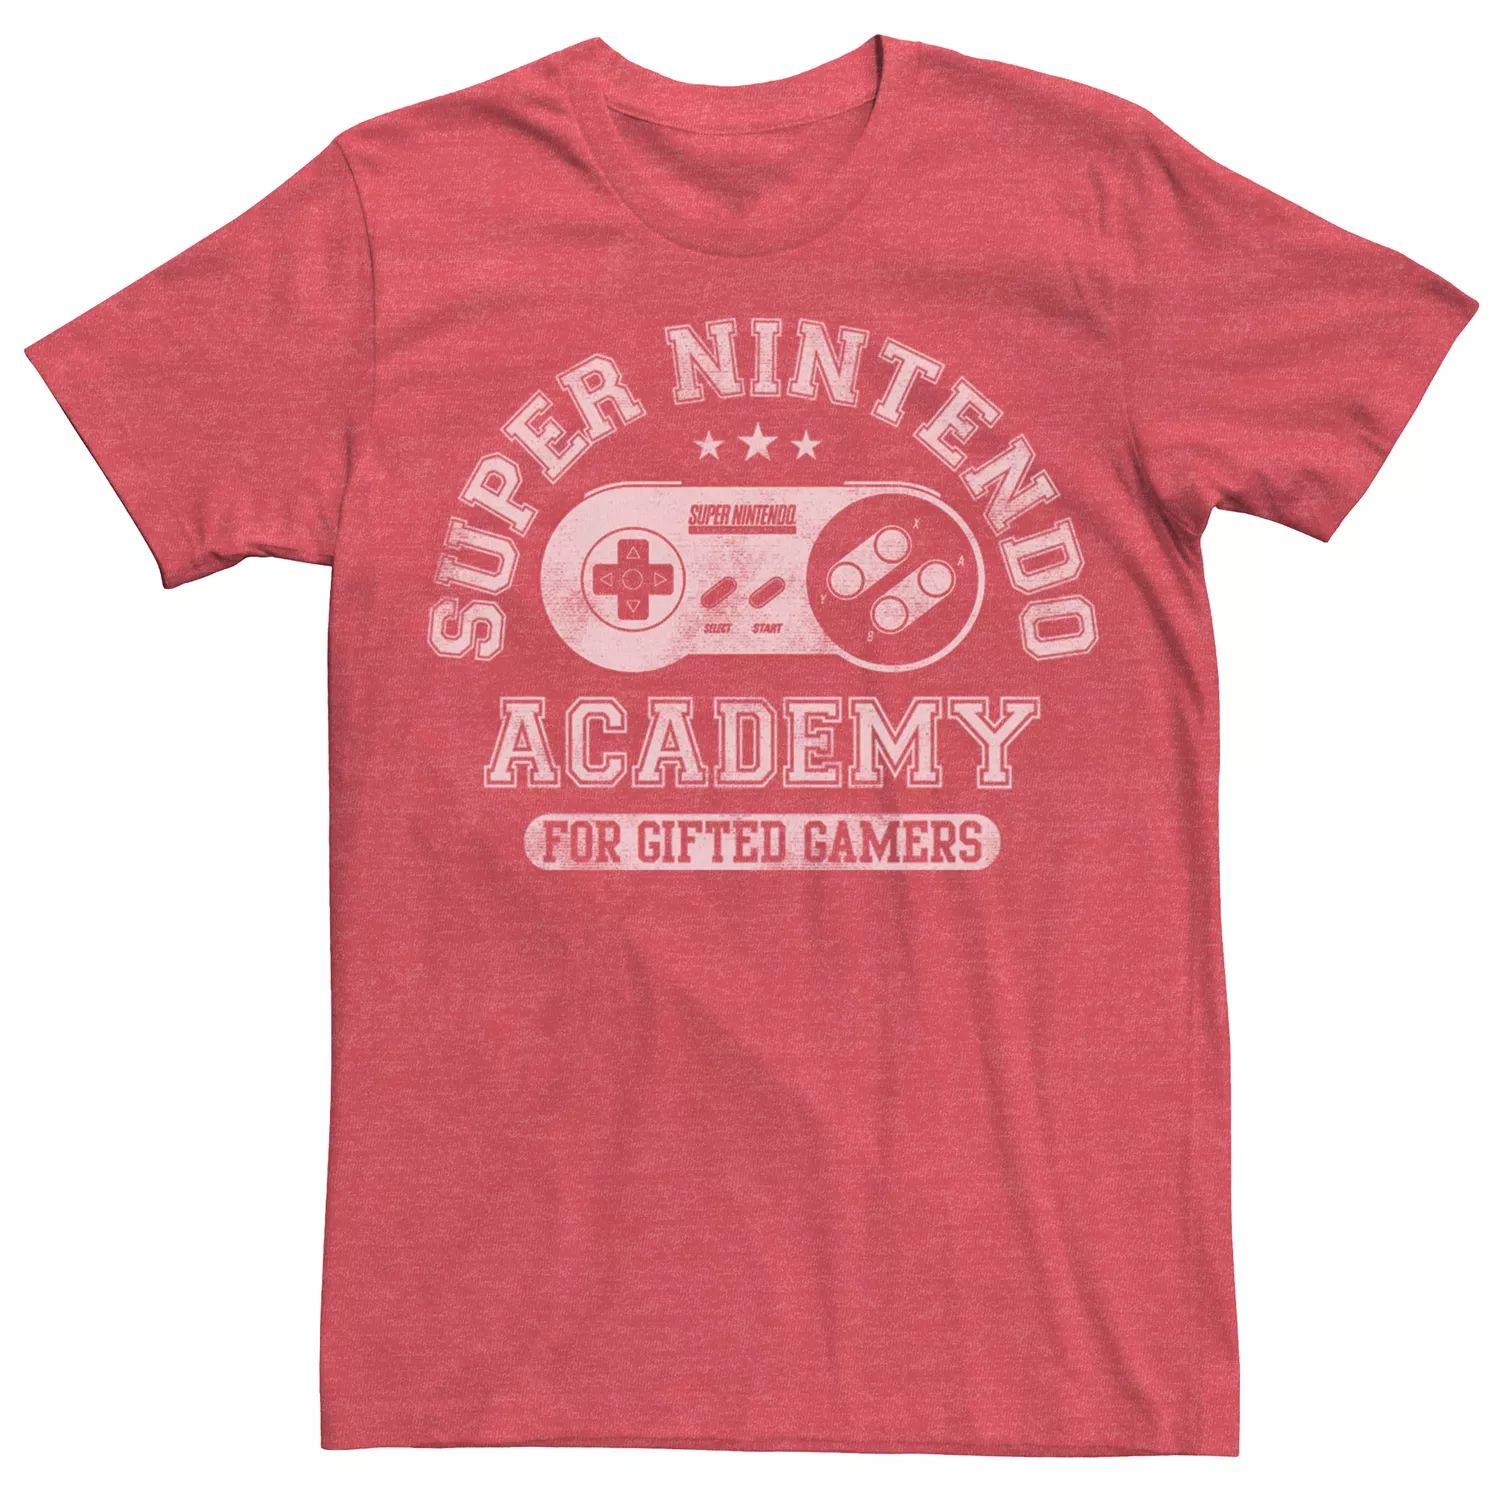 Мужская футболка Gifted Gamer Academy Licensed Character